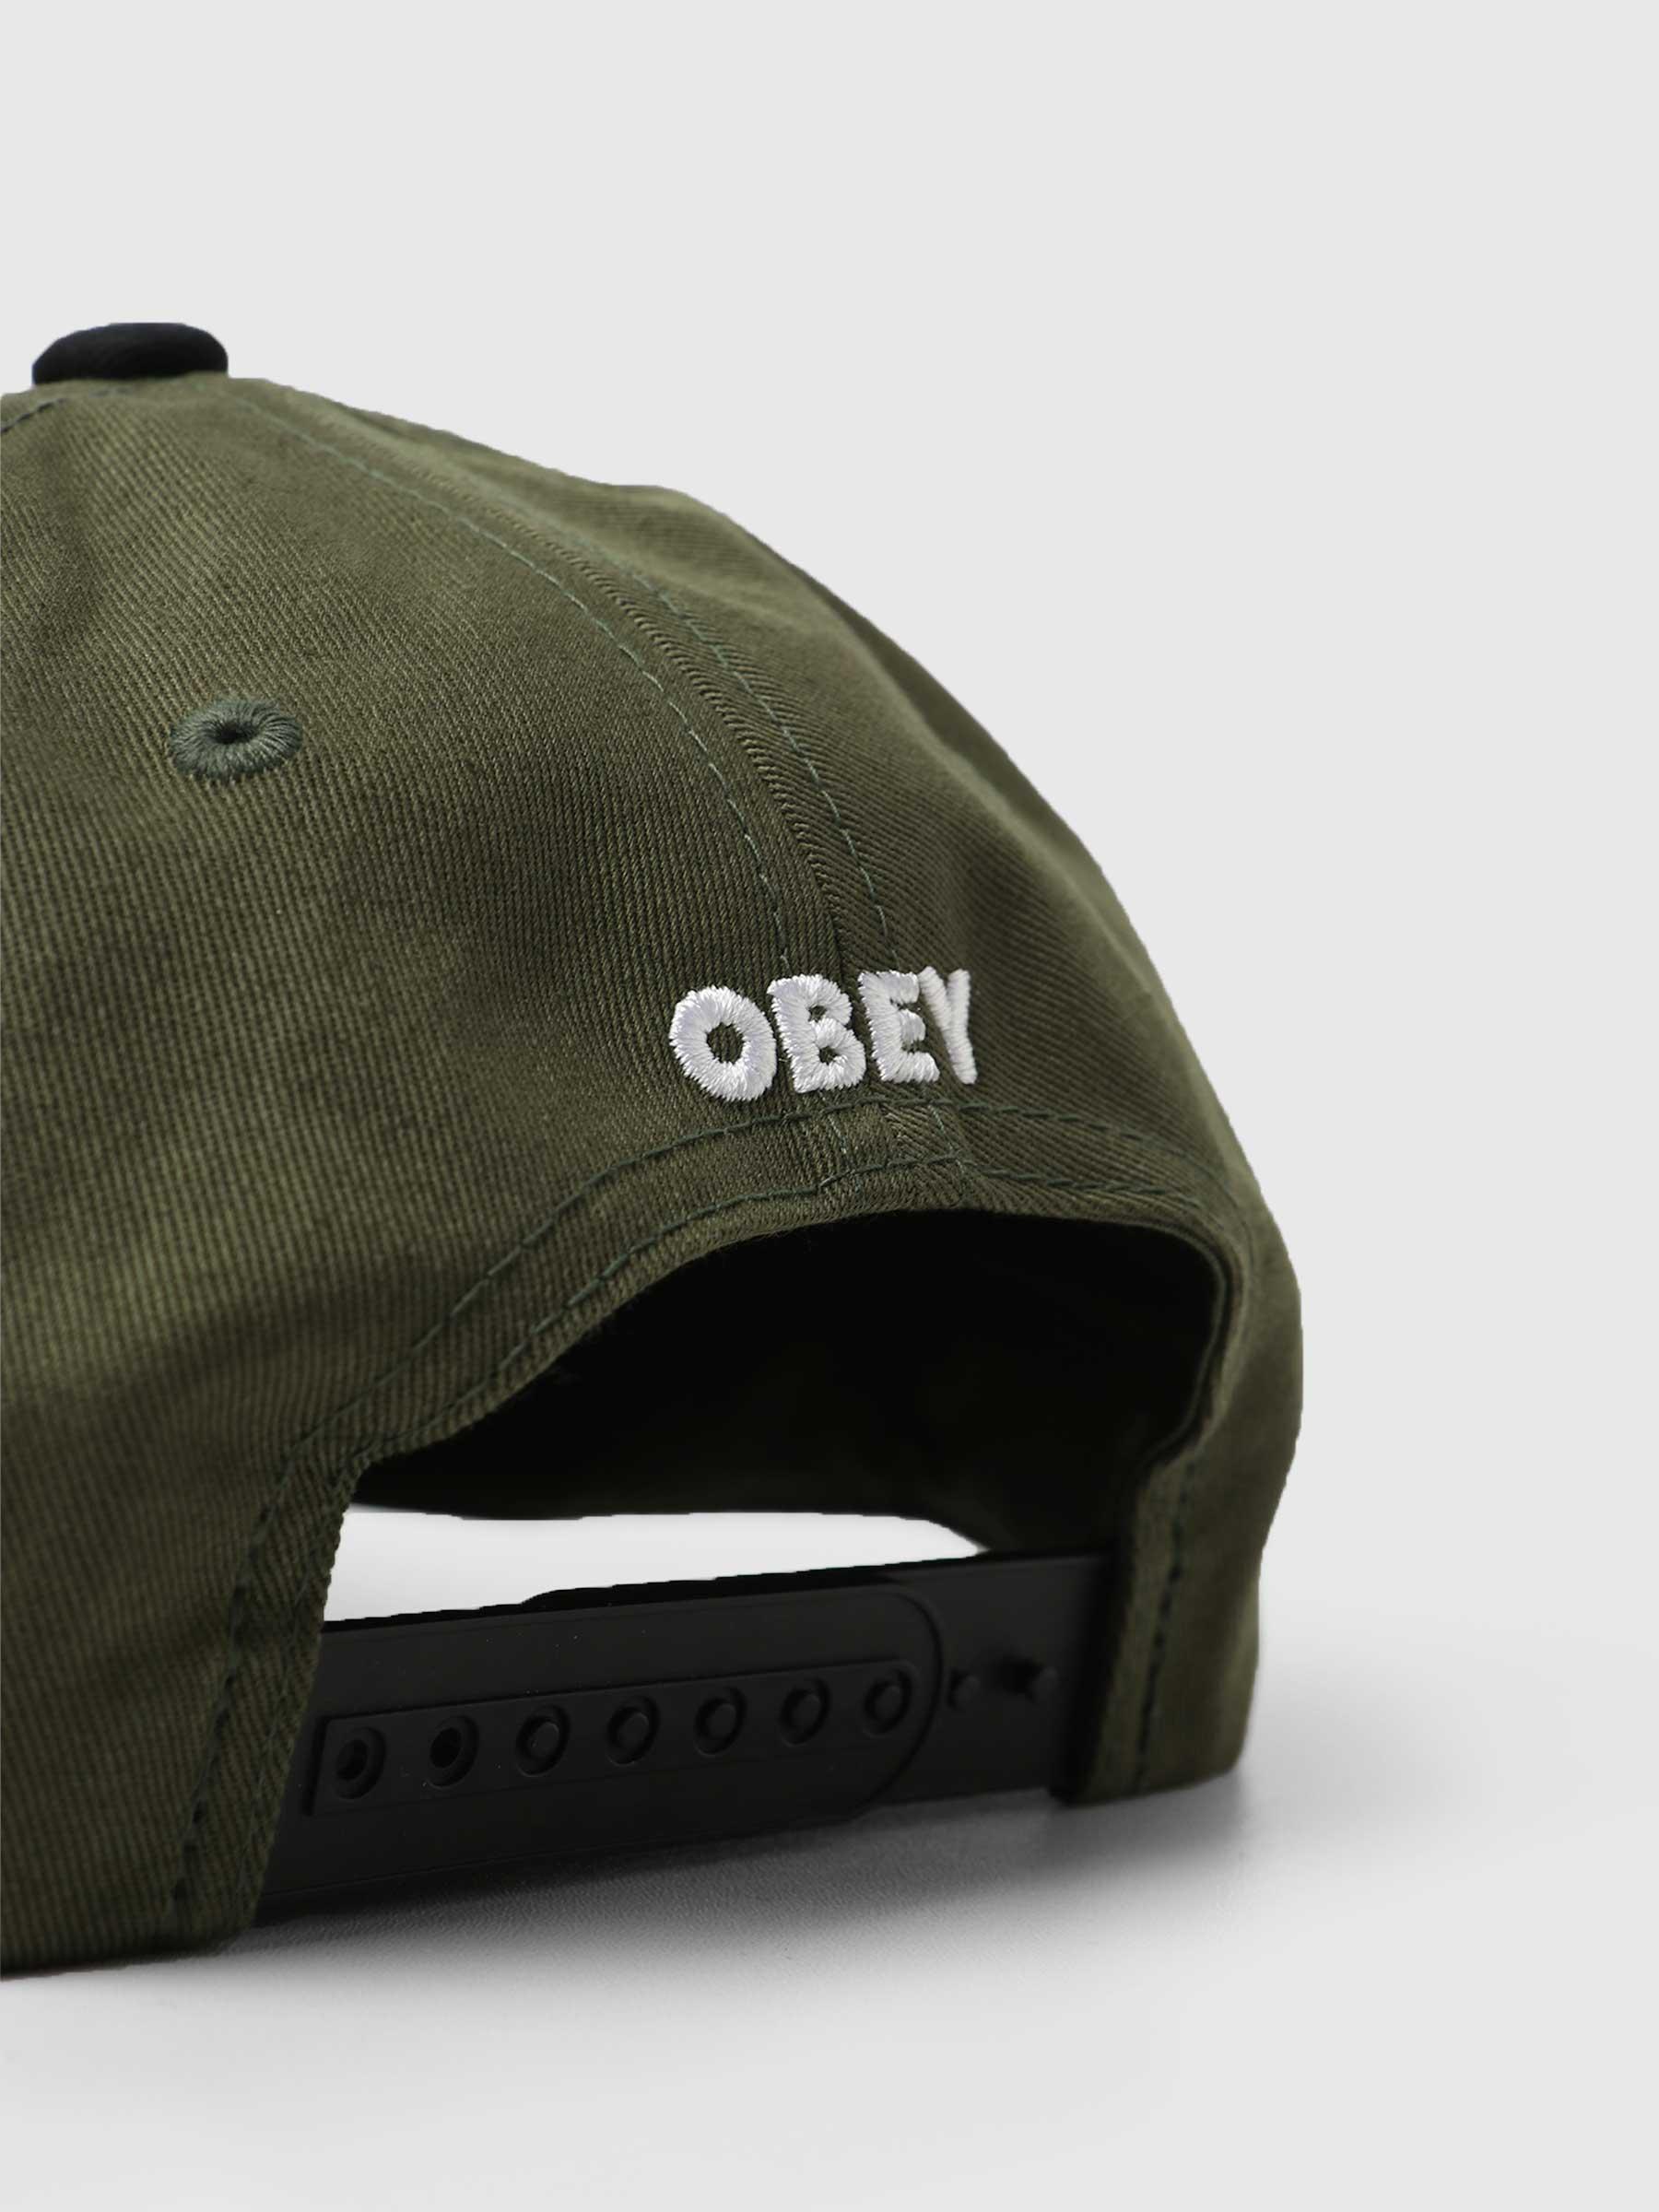 Obey Unity 6 Panel Snapback 6 Panel Hat Olive Multi 100580291